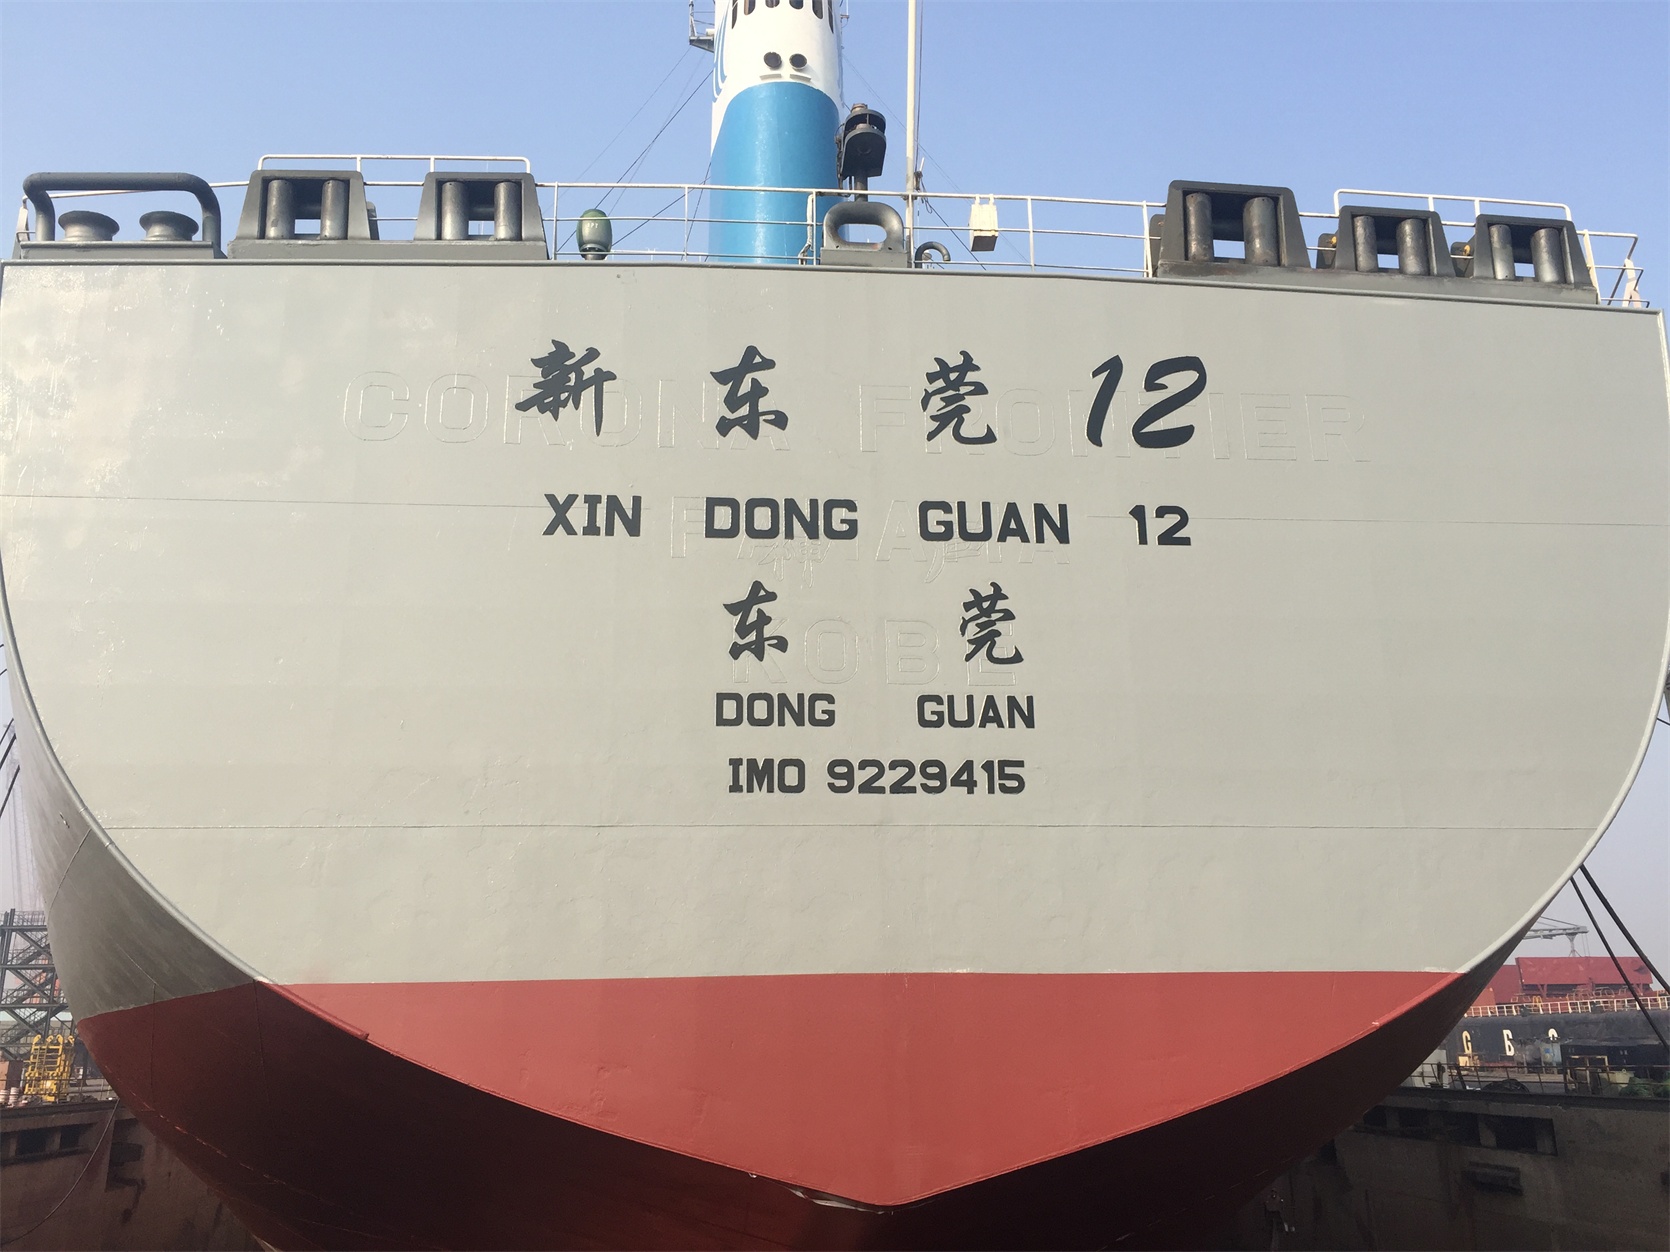 Haichang Shipping added a 